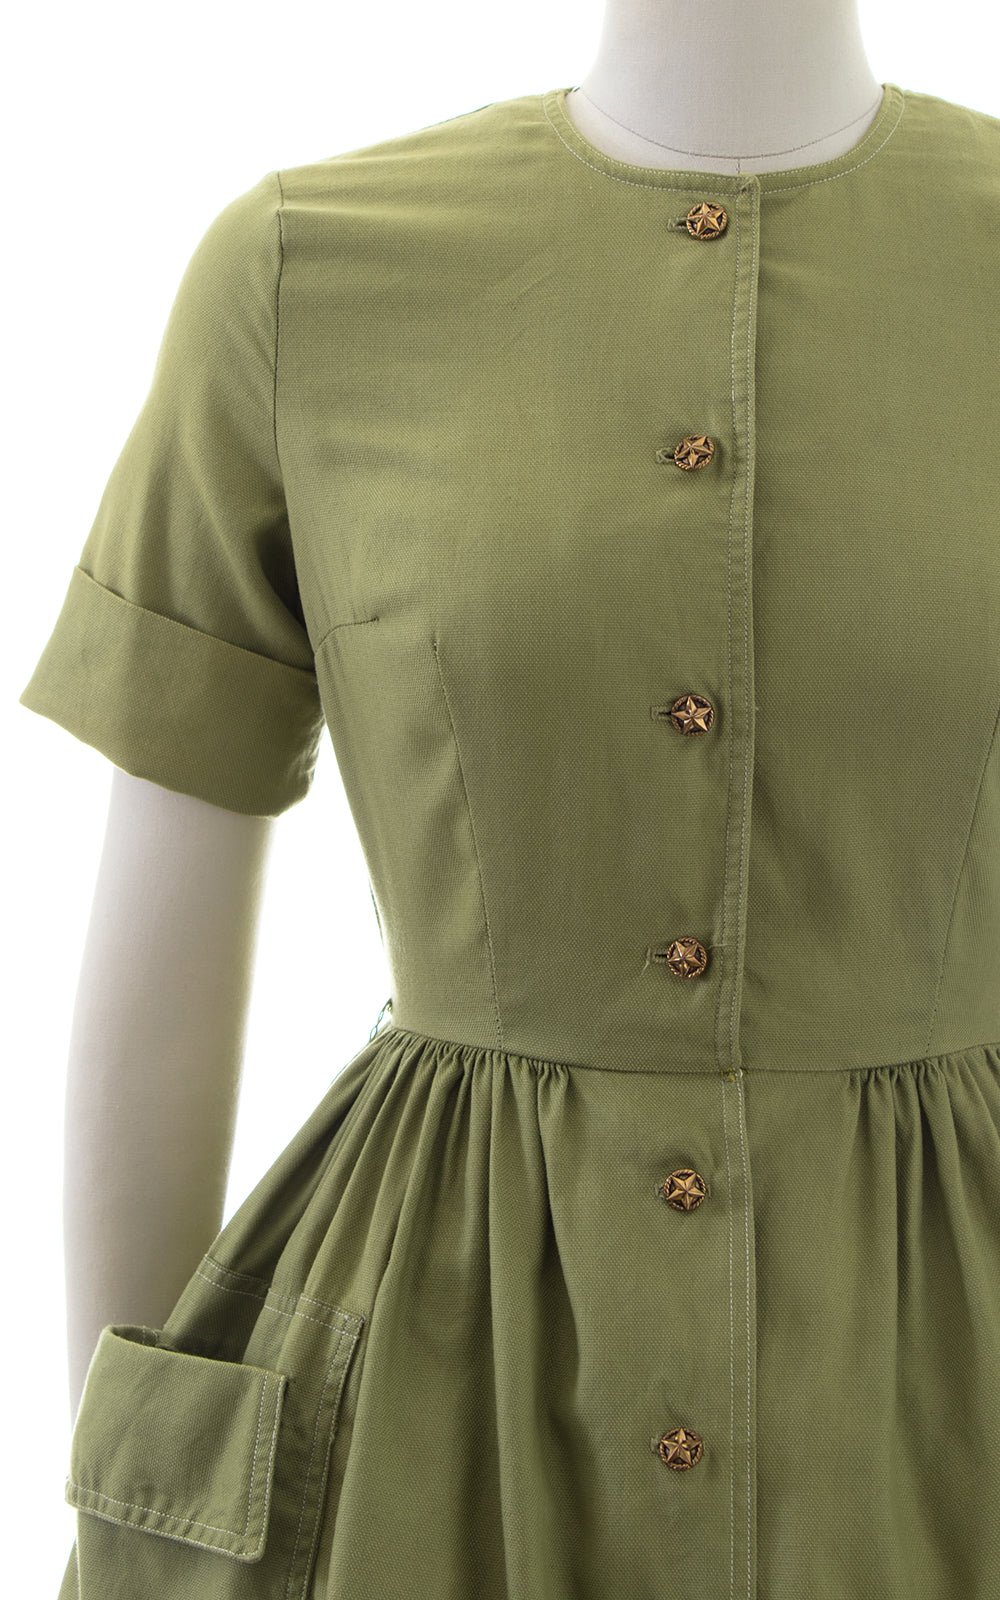 1950s Olive Green Shirtwaist Dress with Pockets